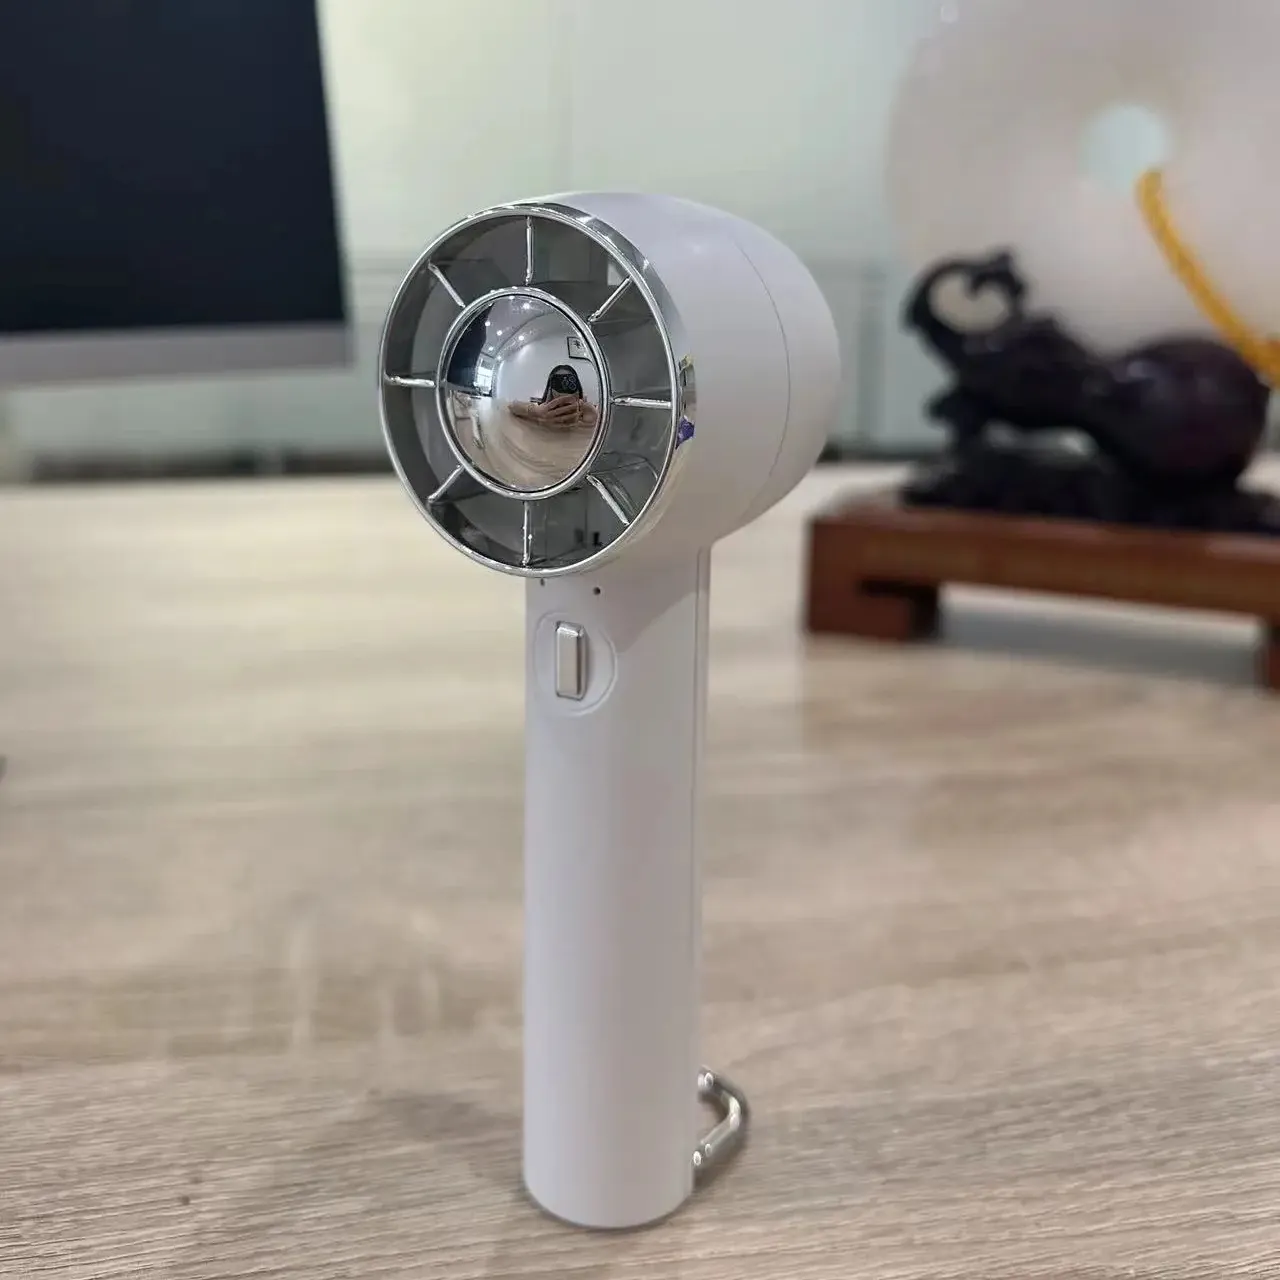 Venta caliente de la fábrica de Shenzhen Cold Compress bldc Fan Ice Cooling mini ventiladores portátiles y portátiles Ventilador de mano con gancho